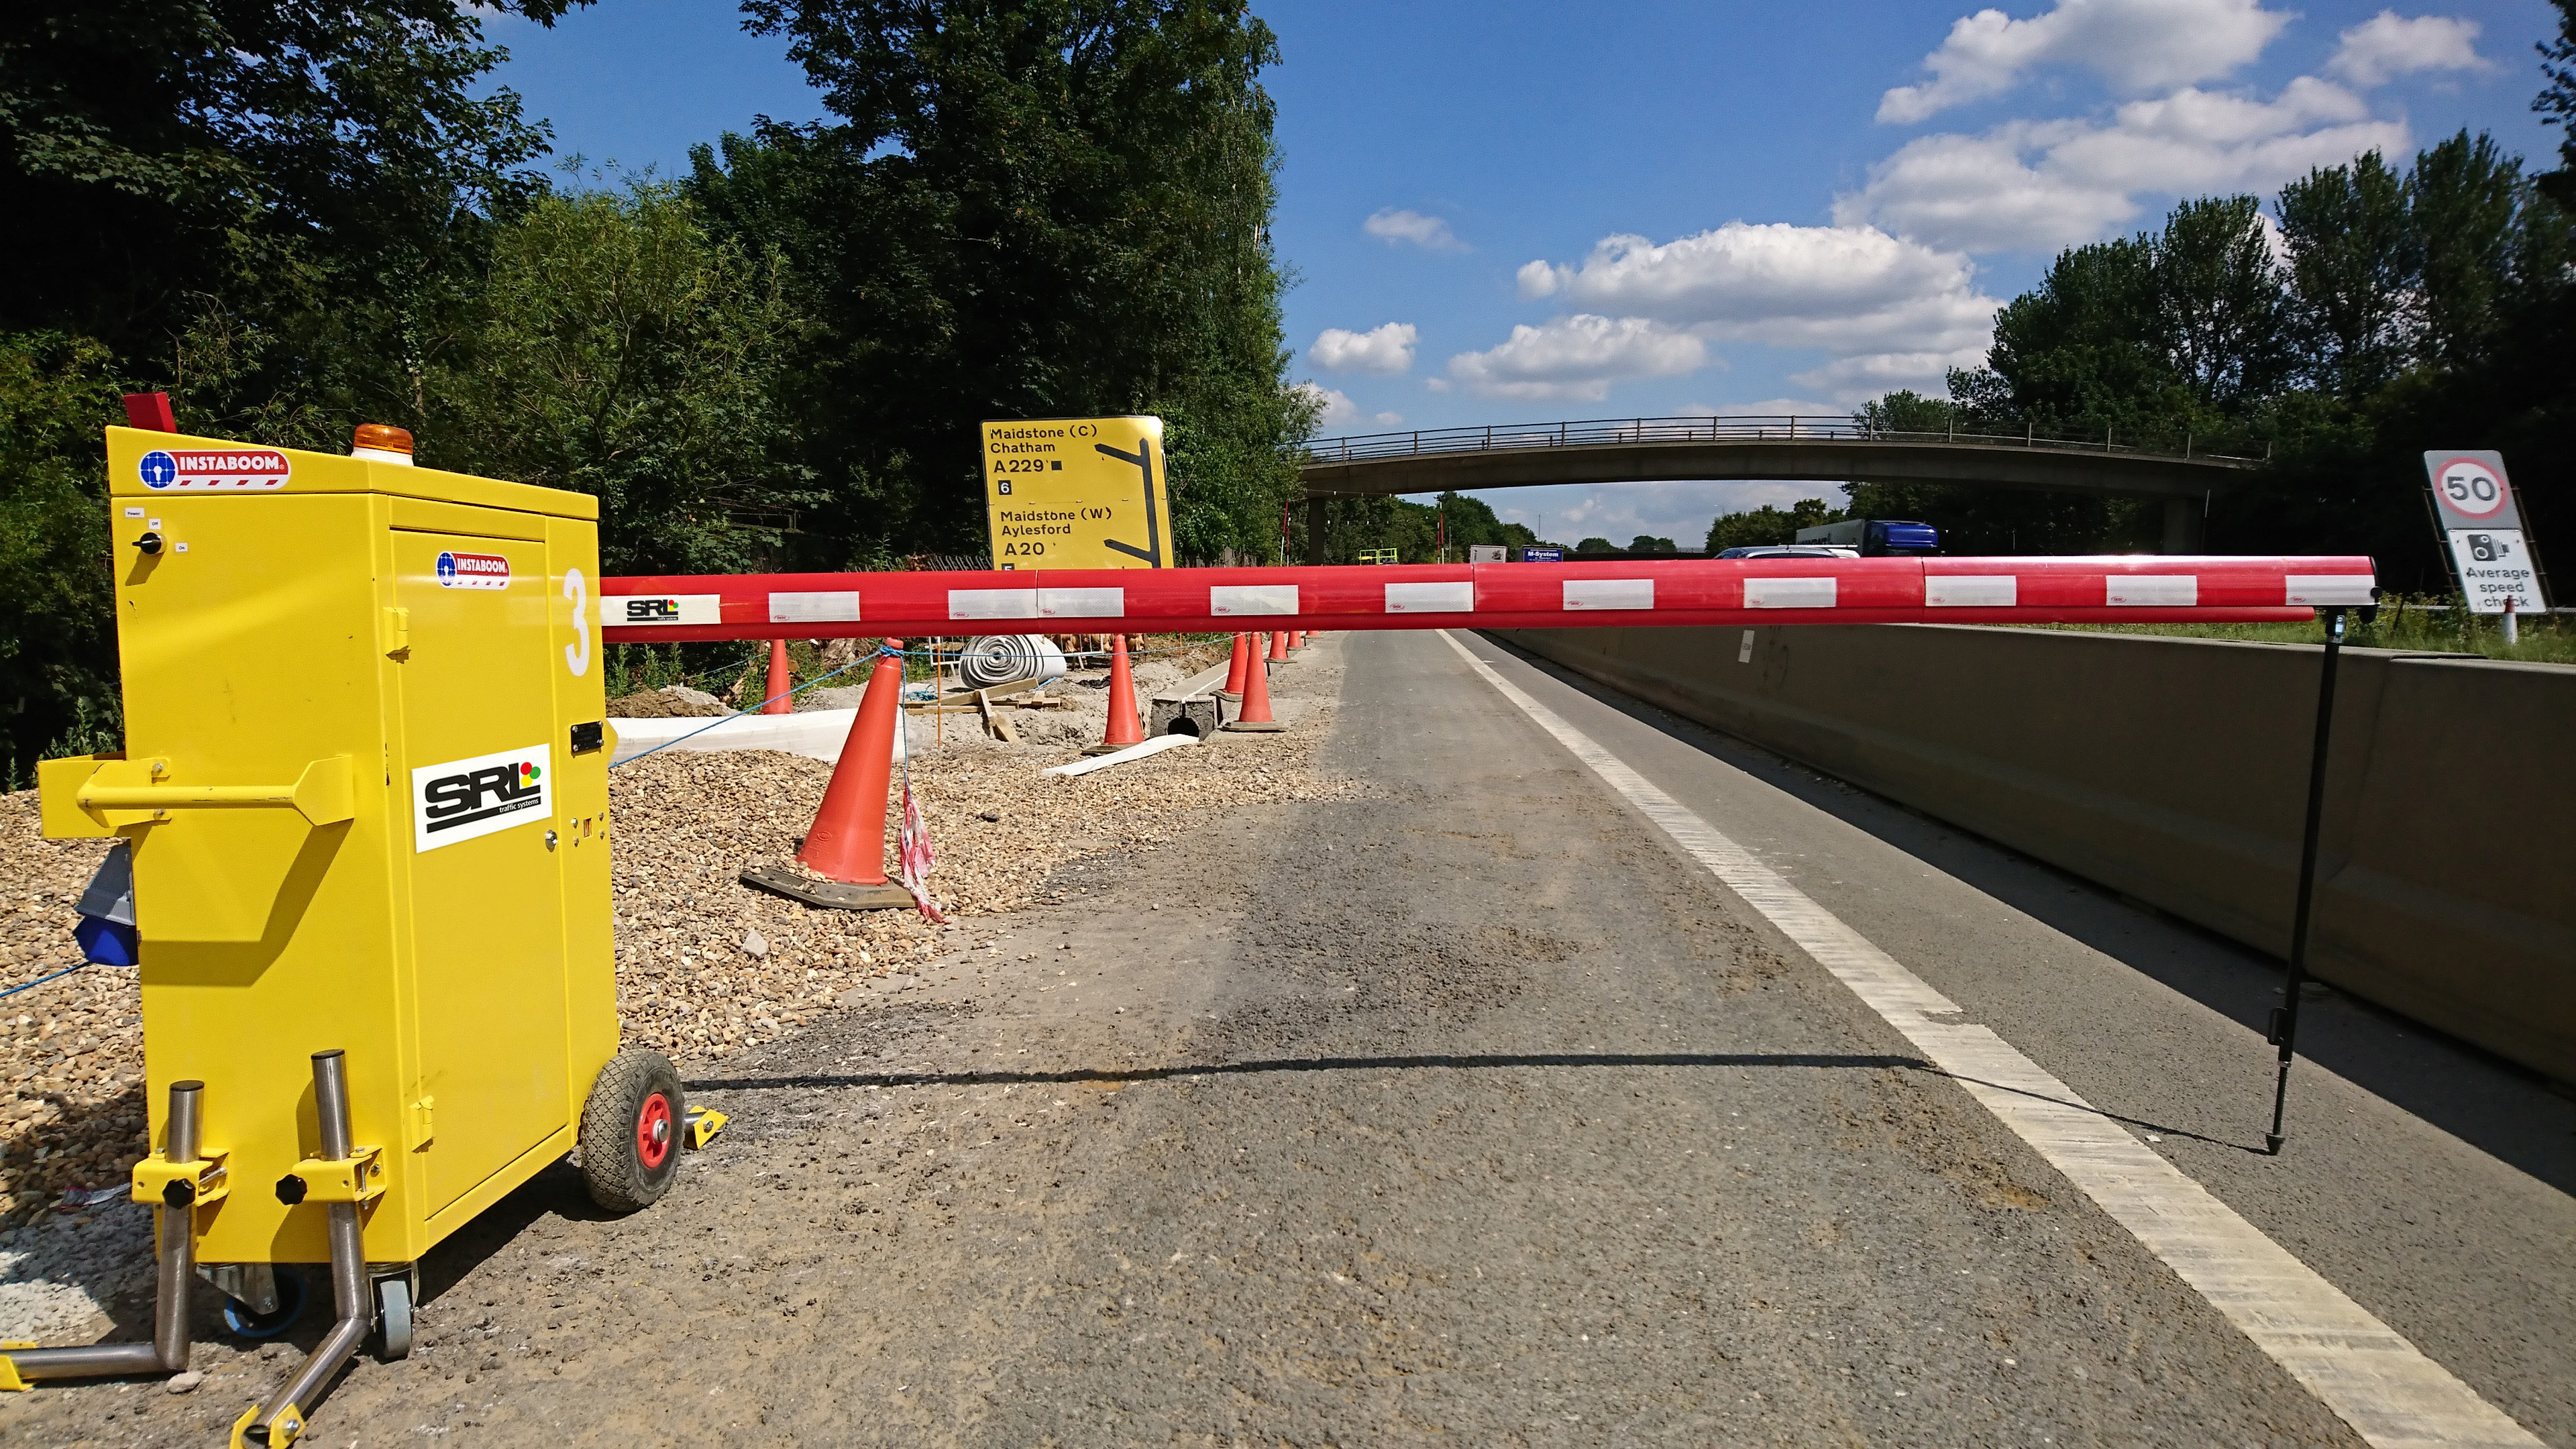 SRL Traffic Systems Solar Gates UK INSTABOOM work zone barriers BS/EN 13241-1 safety standards